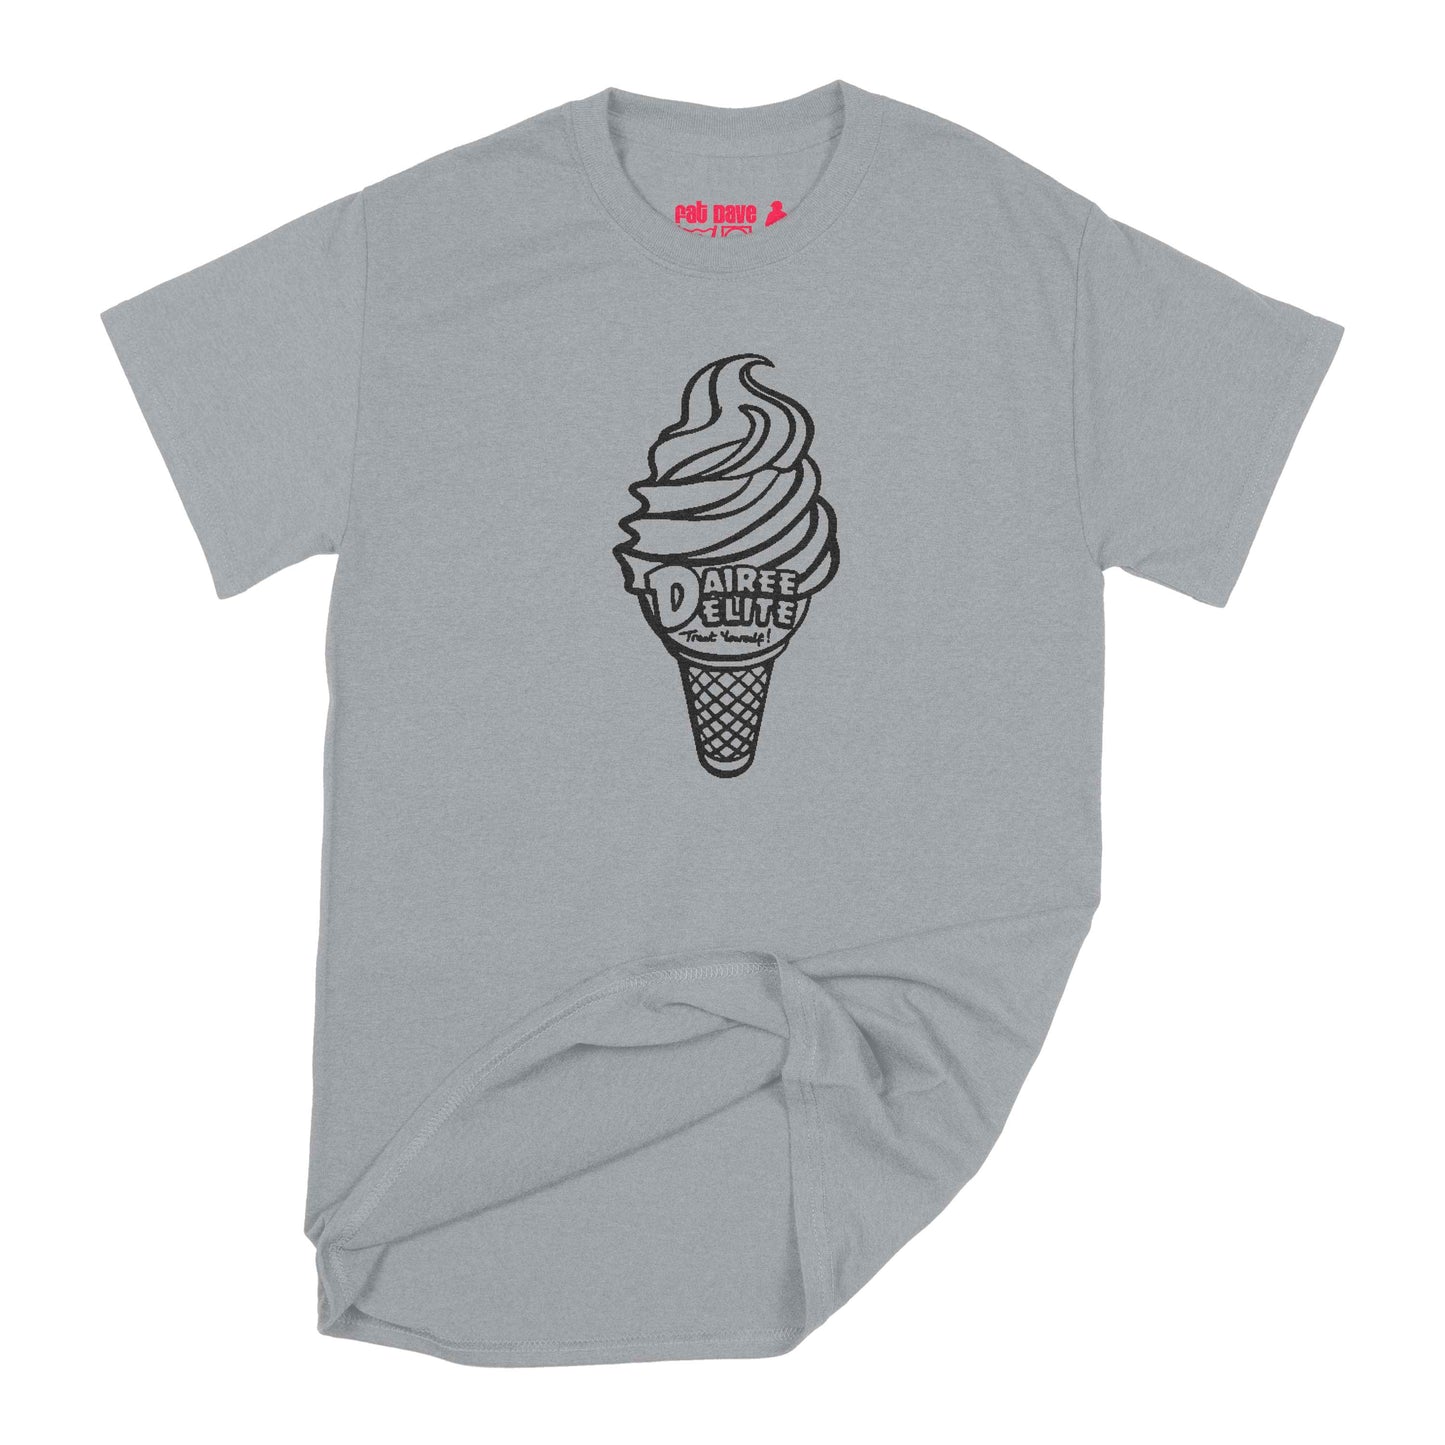 Dairee Delite 70th Anniversary Treat Yourself Cone T-Shirt Small Sport Grey